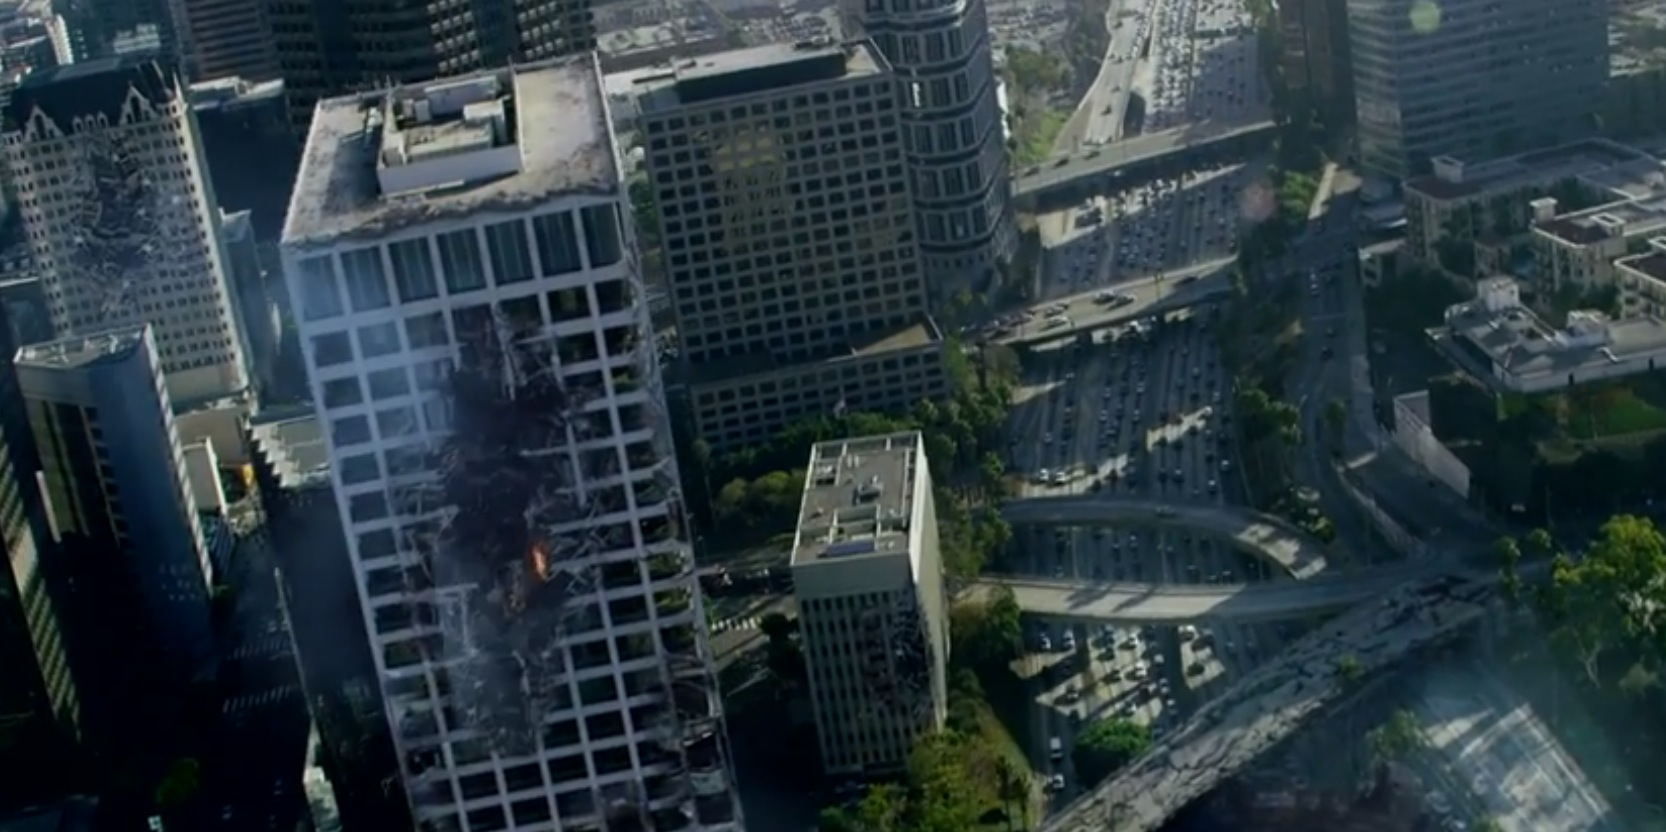 After Effects : Teaser Destroyed  City by Andrew Kramer